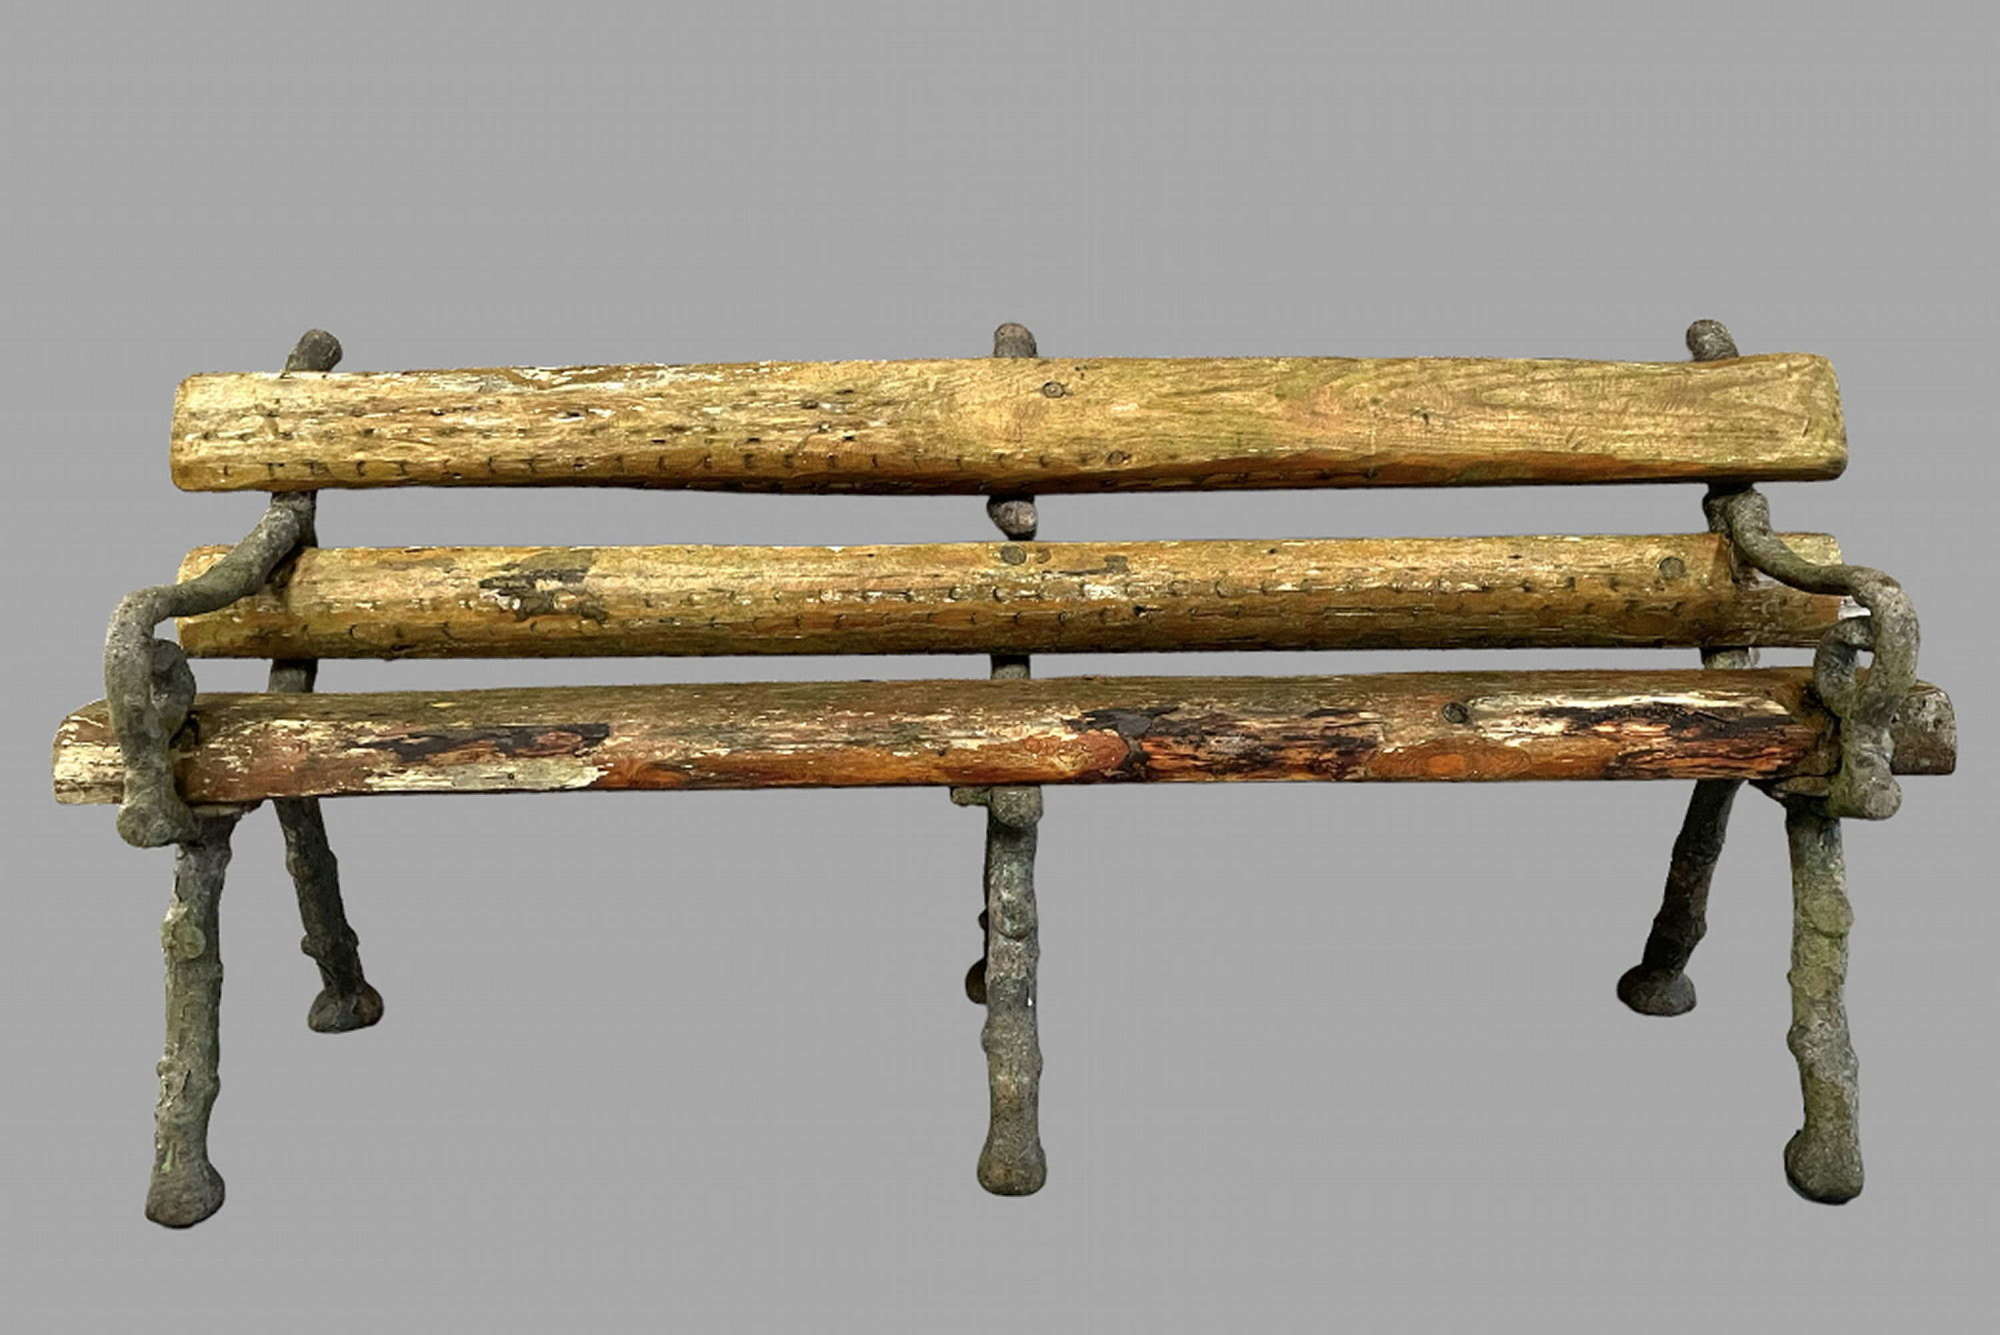 An Iron and Wooden Log Garden Seat